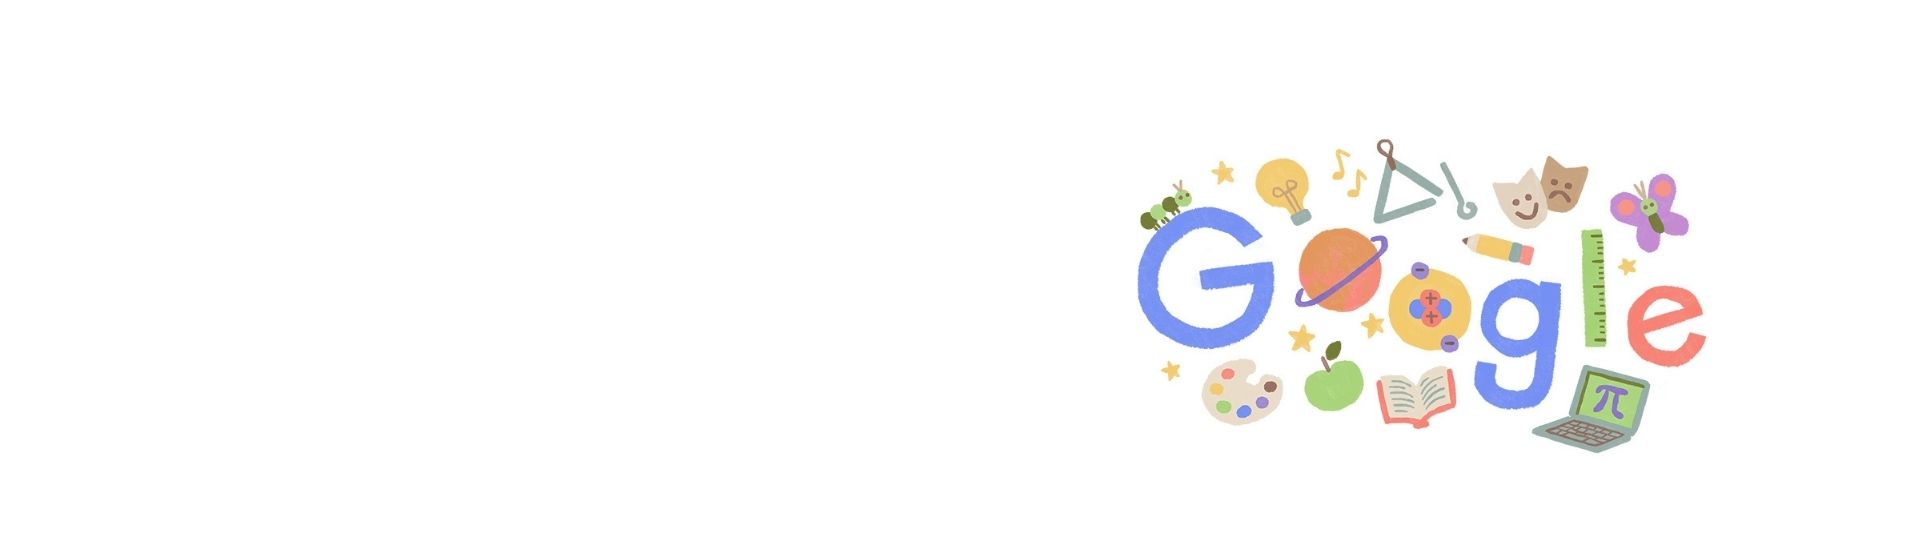 Imagen del doodle de google